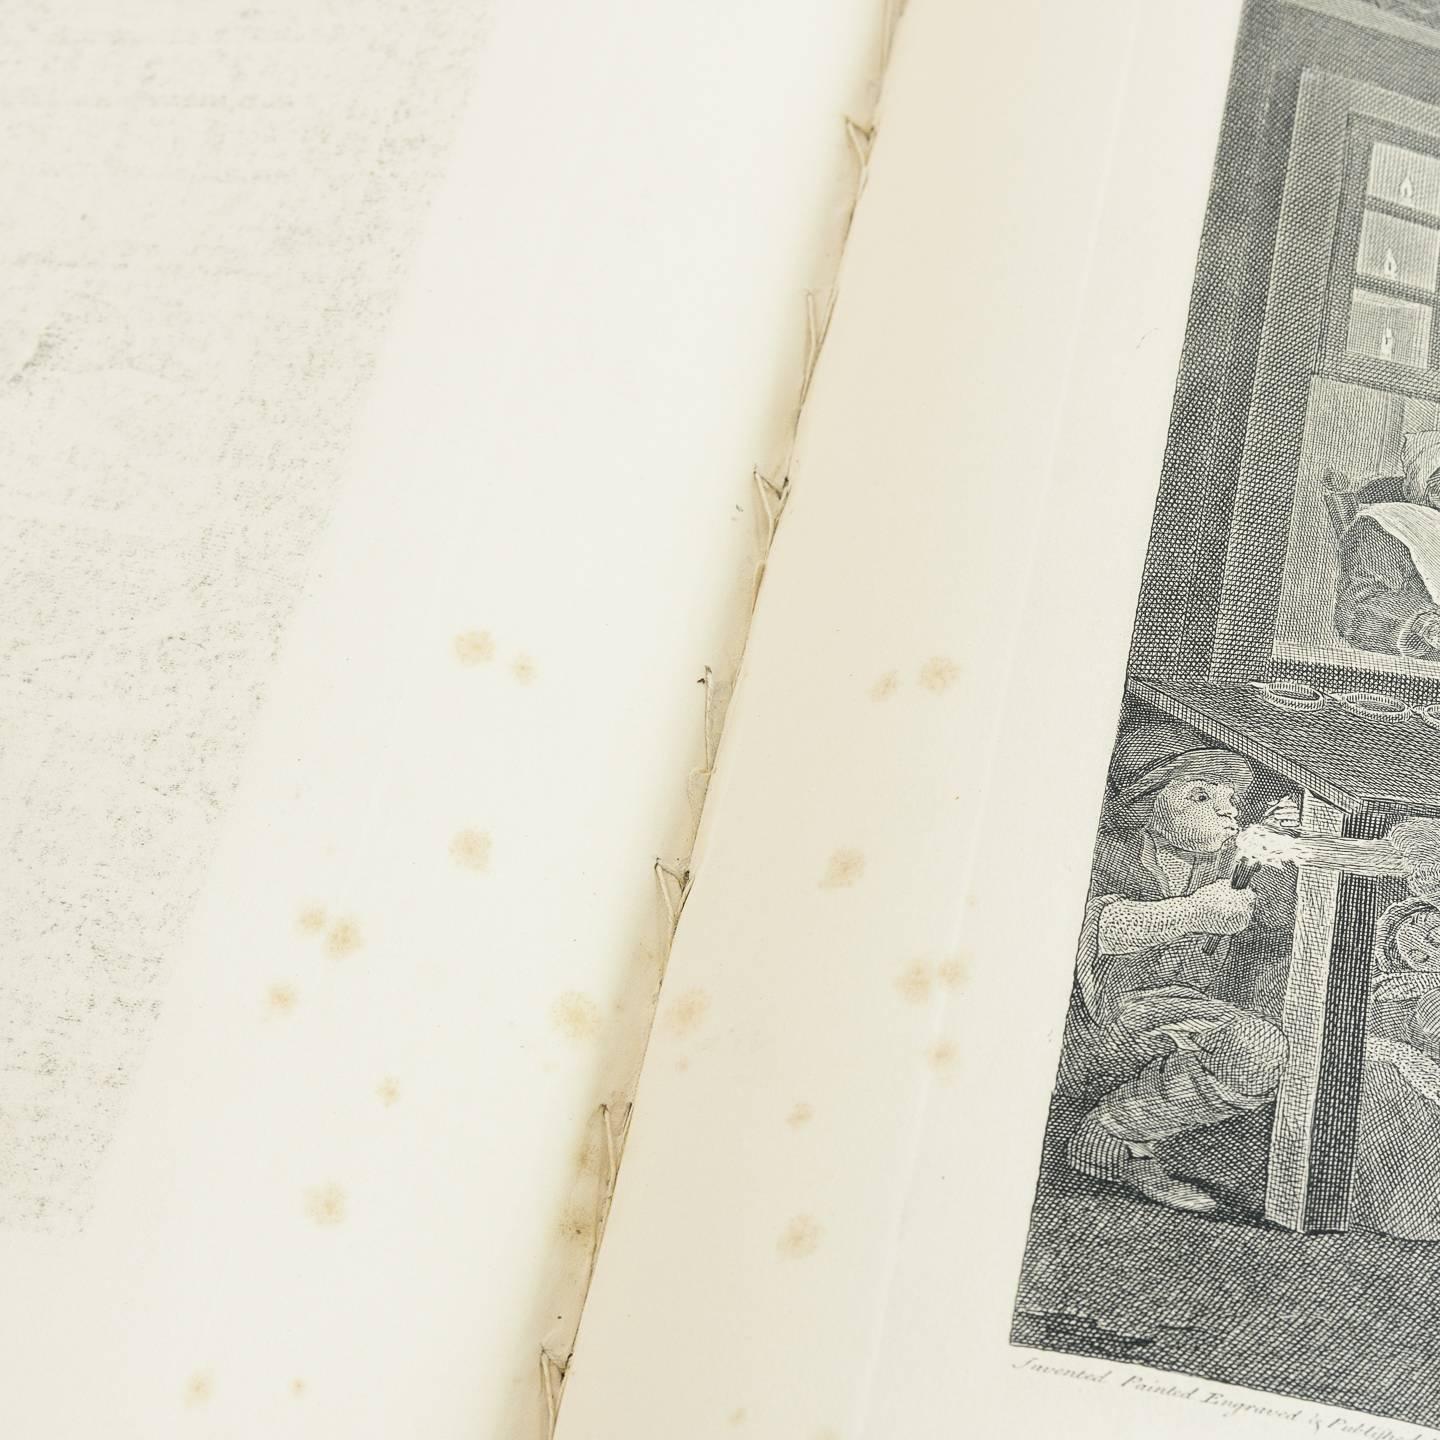 Works of Hogarth, Complete Folio, 1822 1